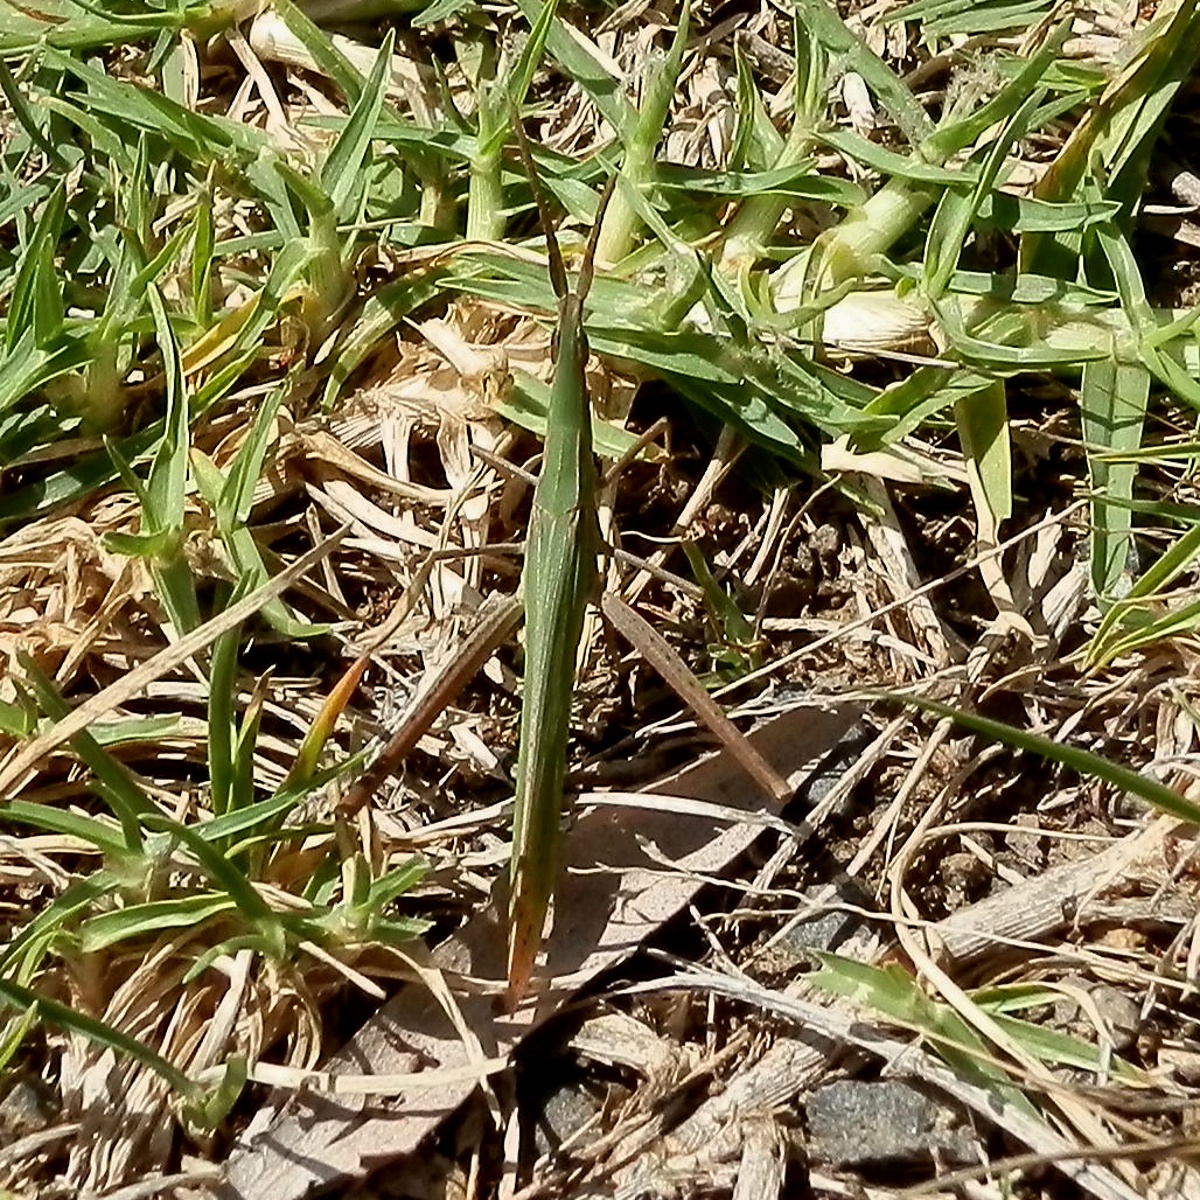 Australian Grass Pyrgomorph